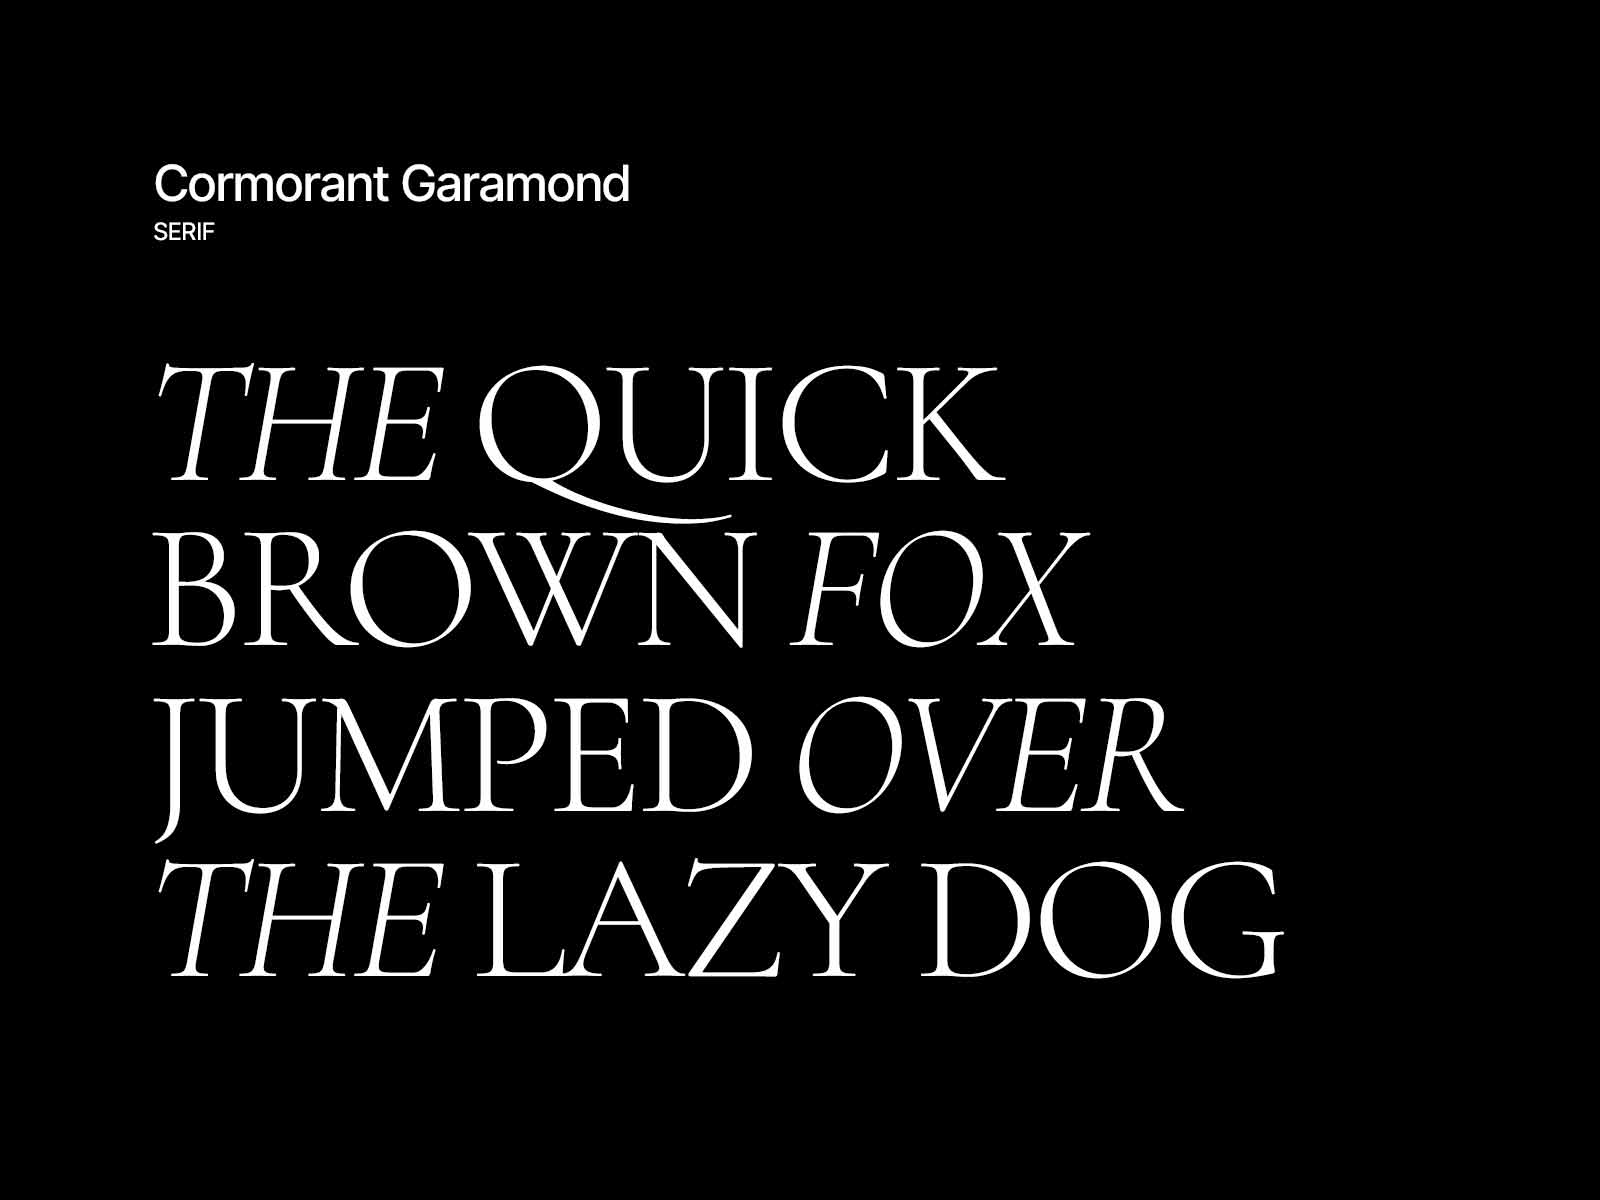 Typeface: Cormorant Garamond